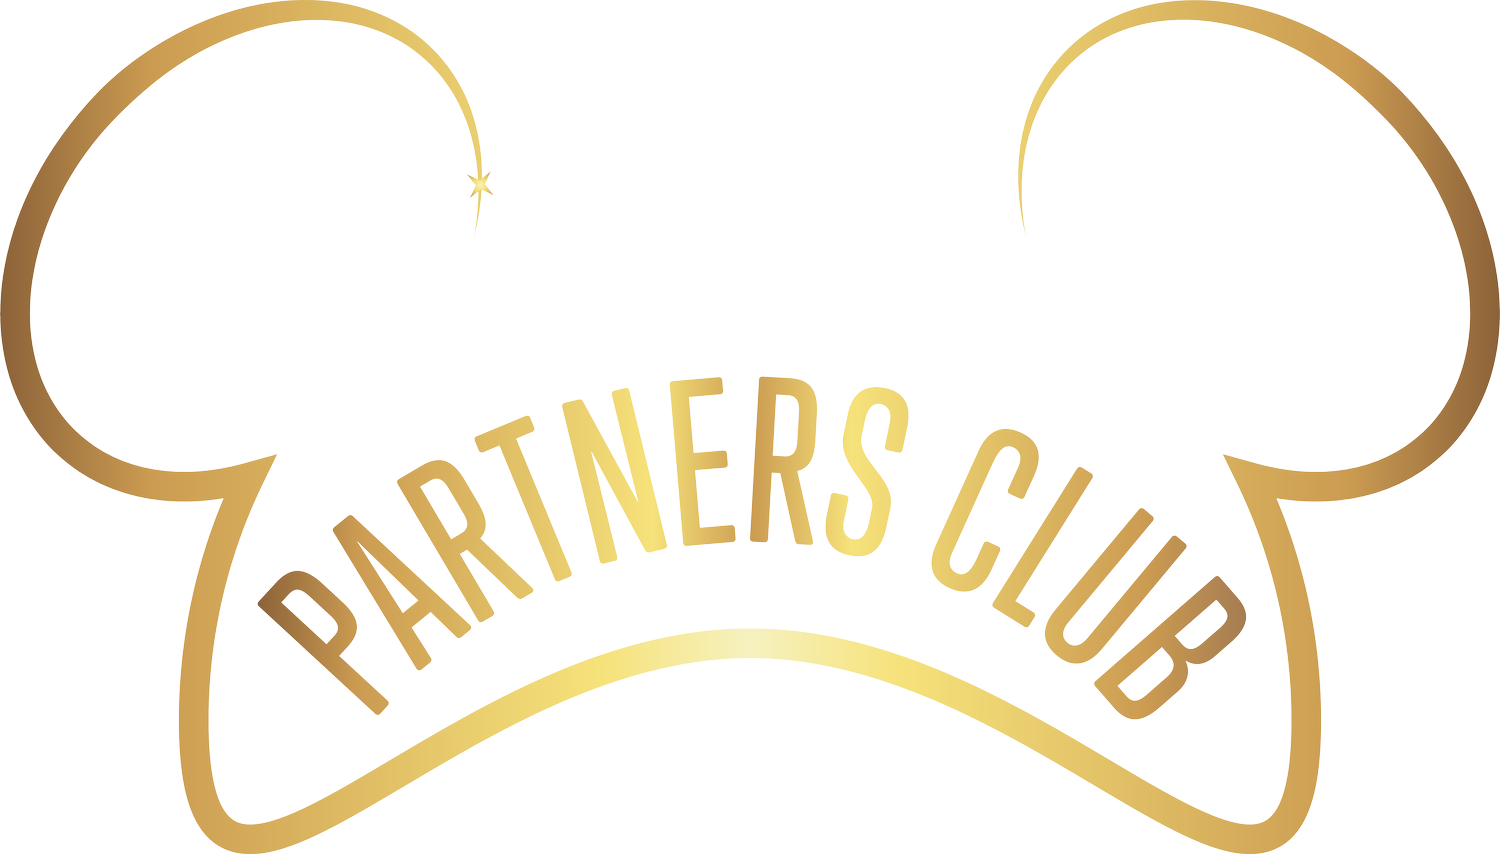 Partners Club